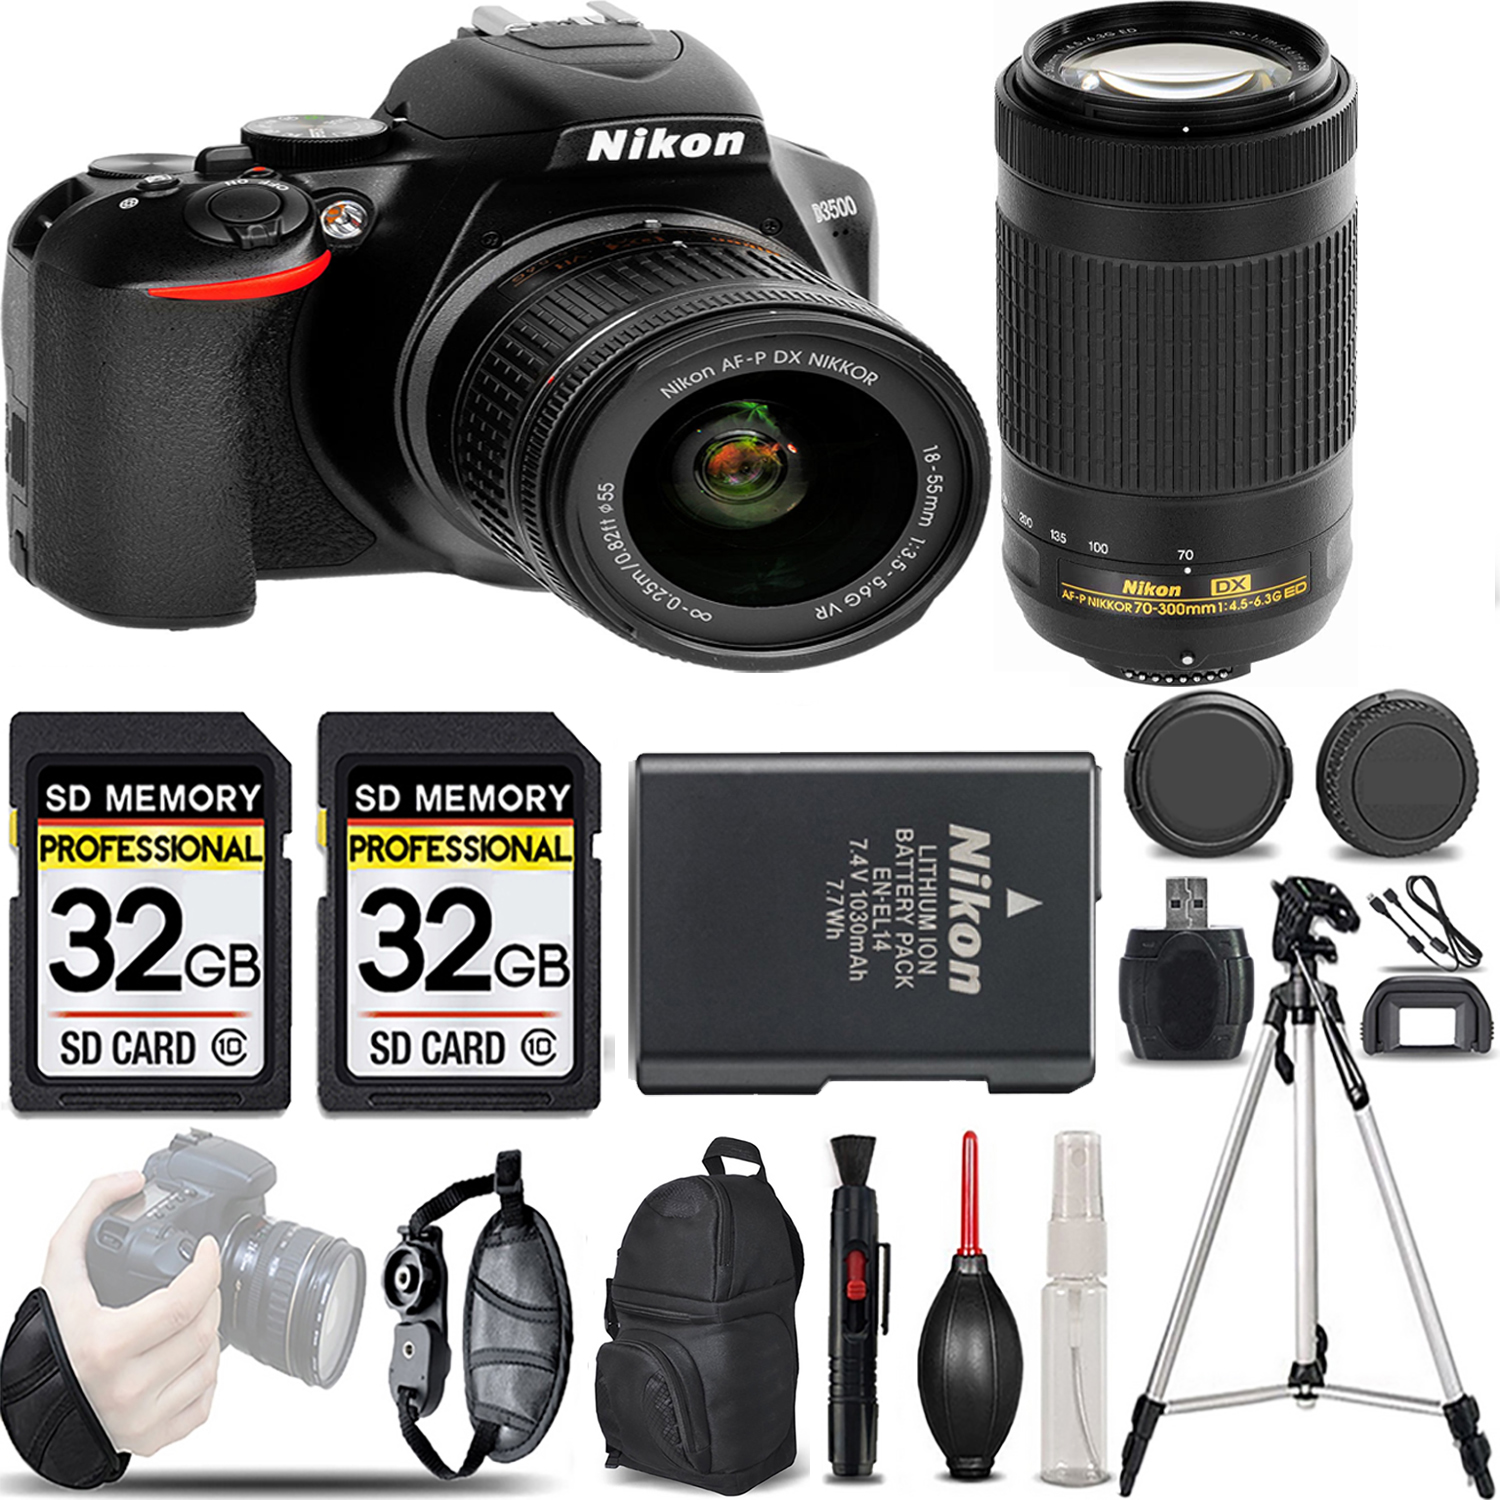 D3500 DSLR Camera with 18-55mm Lens + 70- 300mm Lens - LOADED KIT *FREE SHIPPING*